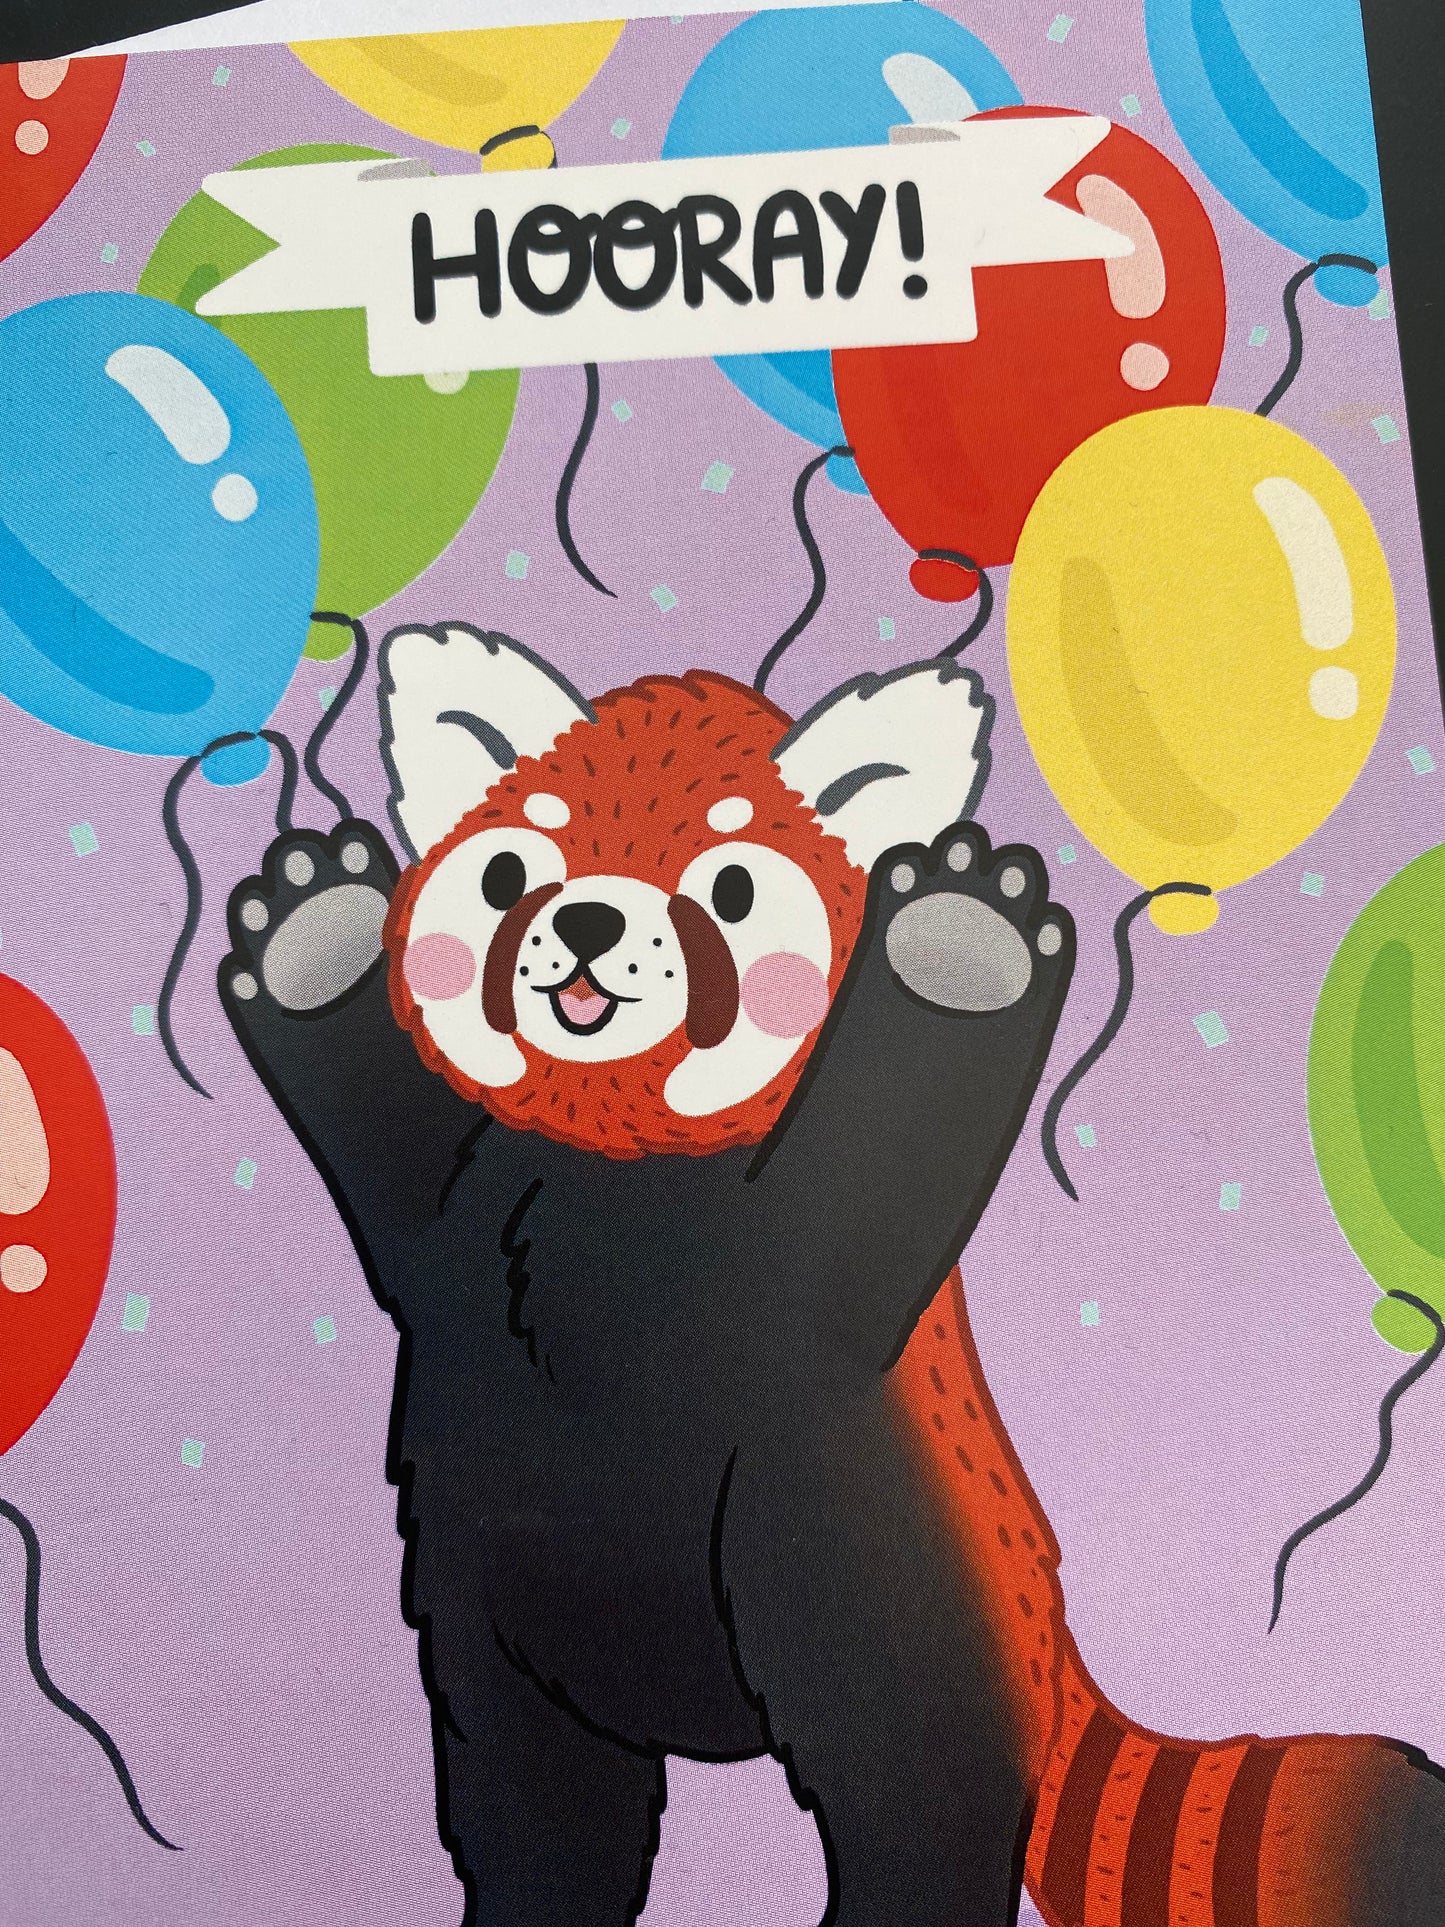 Hooray Red Panda card